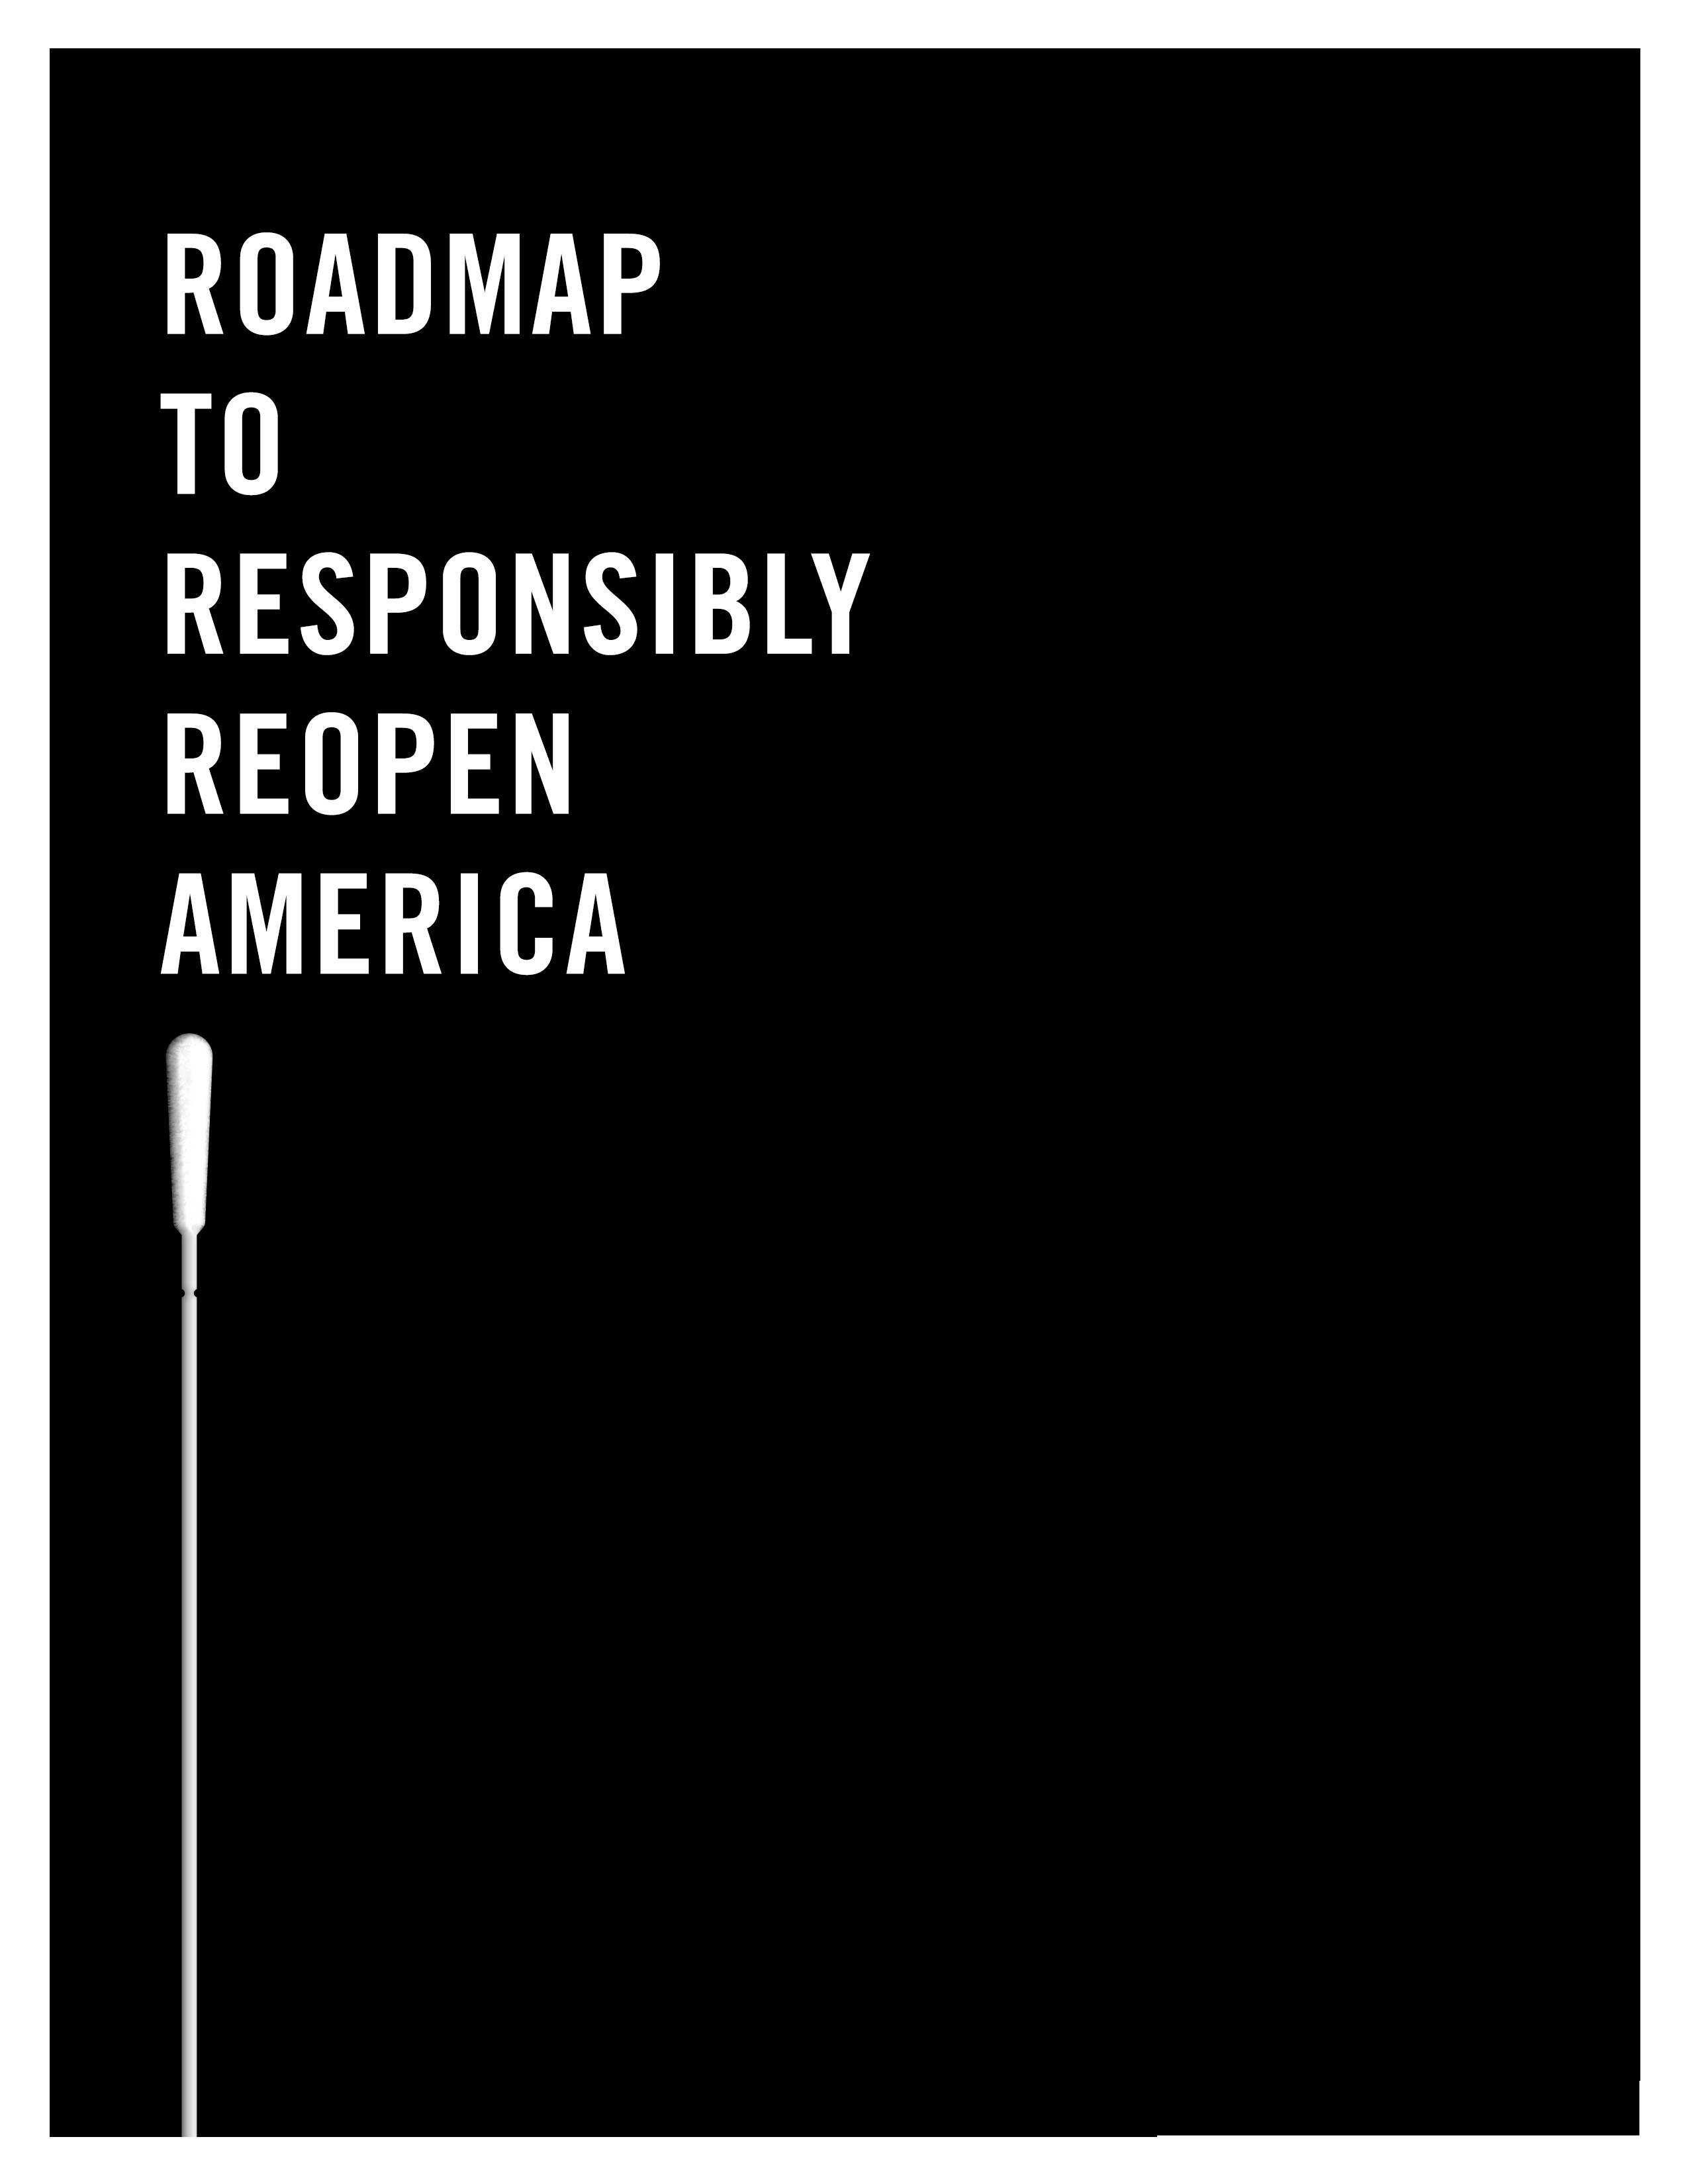 roadmap-cover-image